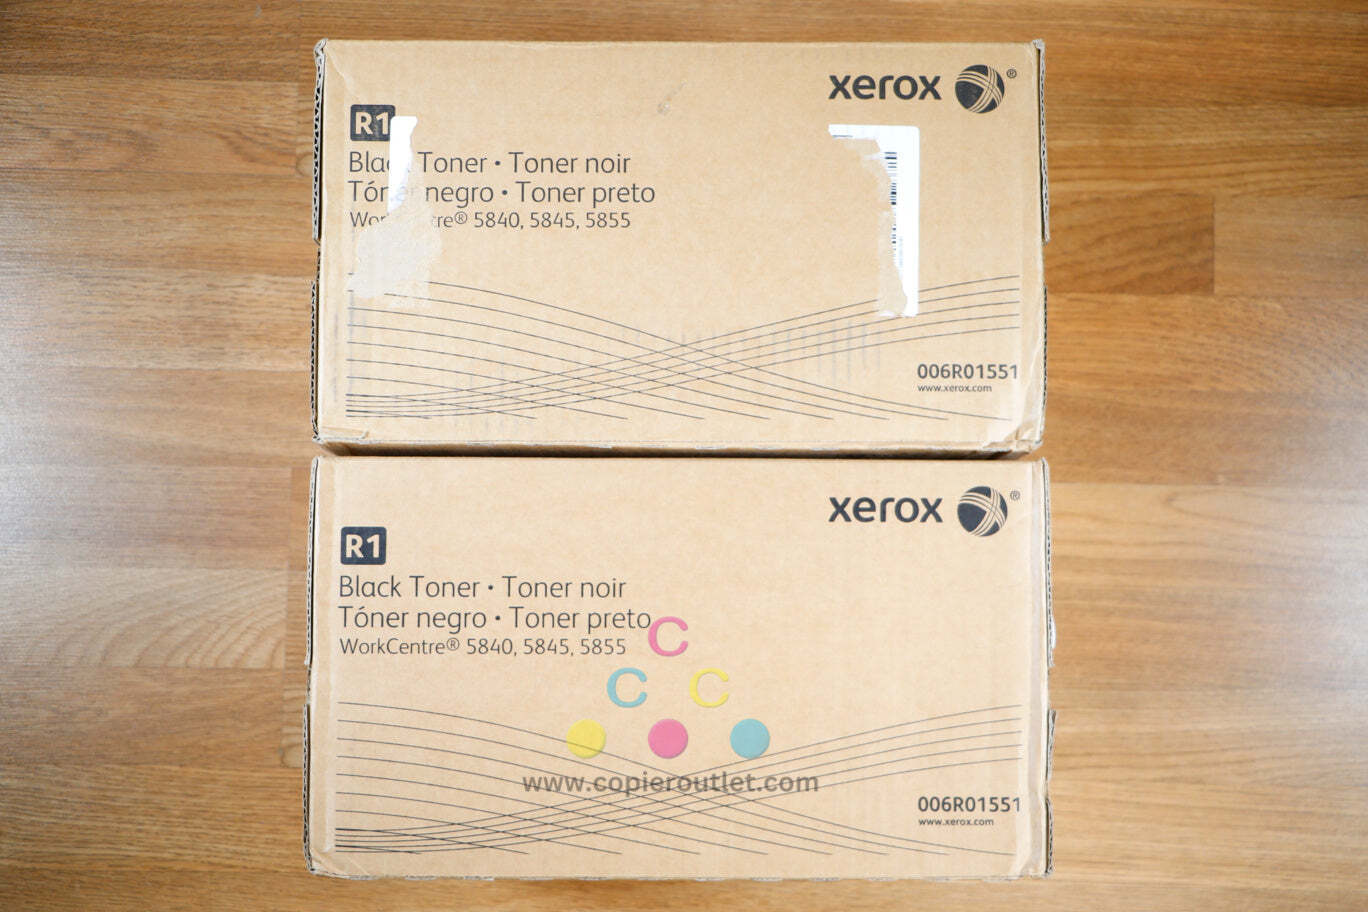 Genuine Lot Of 2 Xerox Black Toner Cartridge 006R01551 WorkCentre 5840,5845,5855